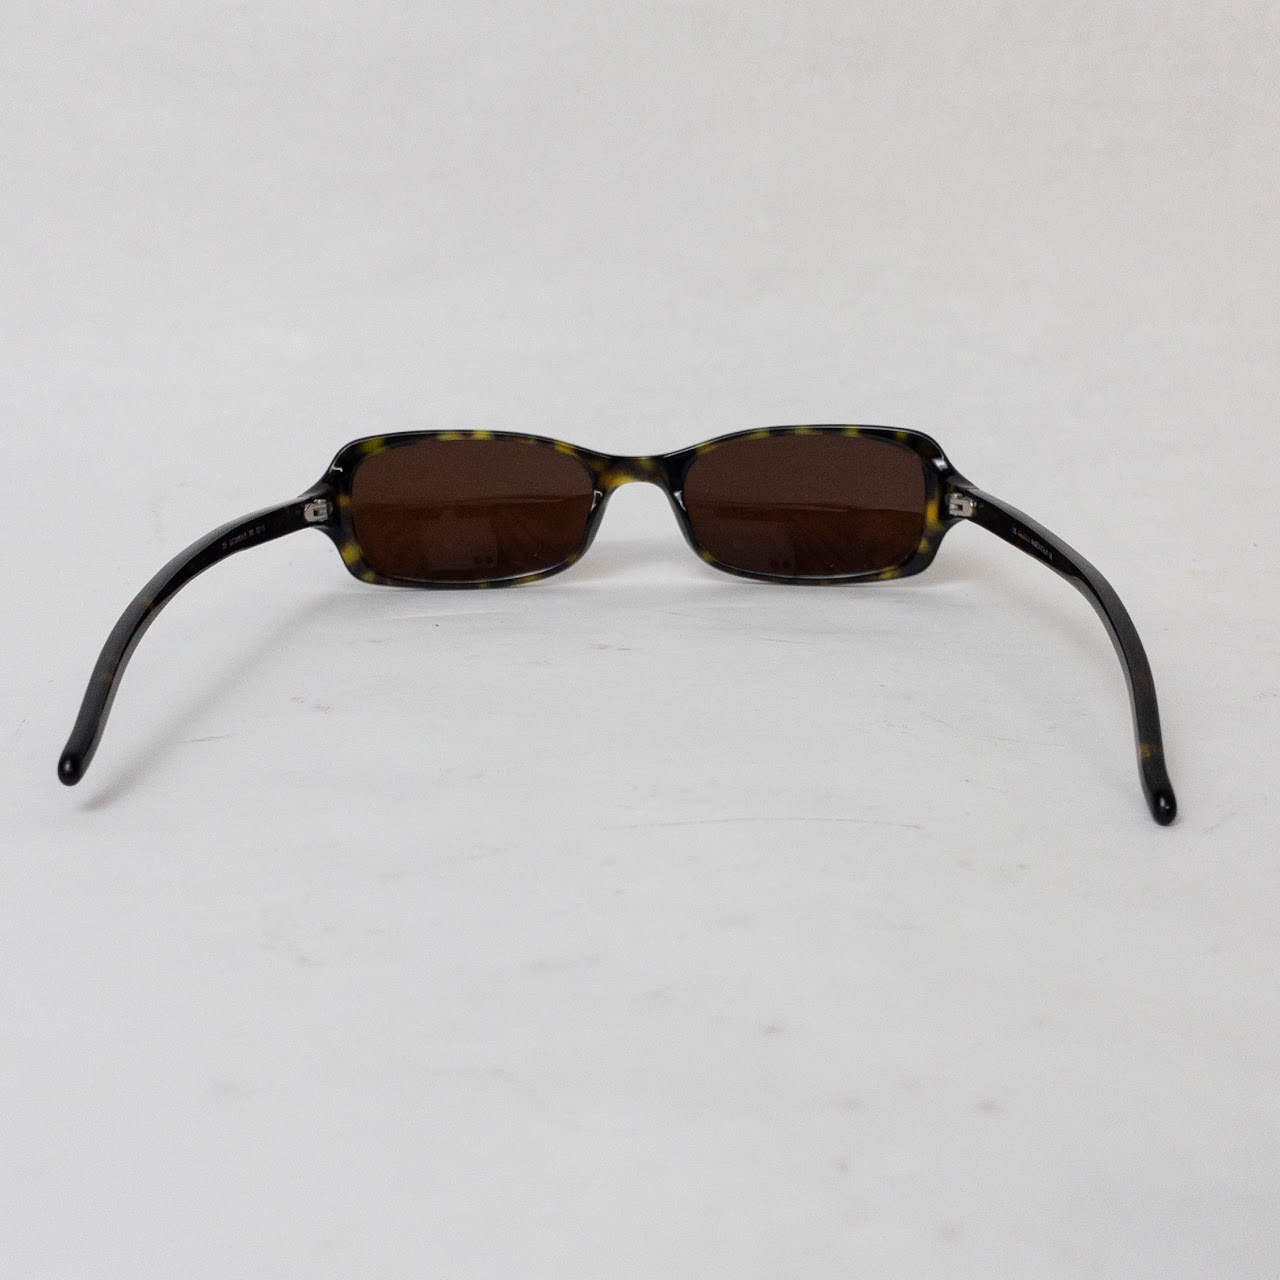 Gucci Tortiseshell Sunglasses